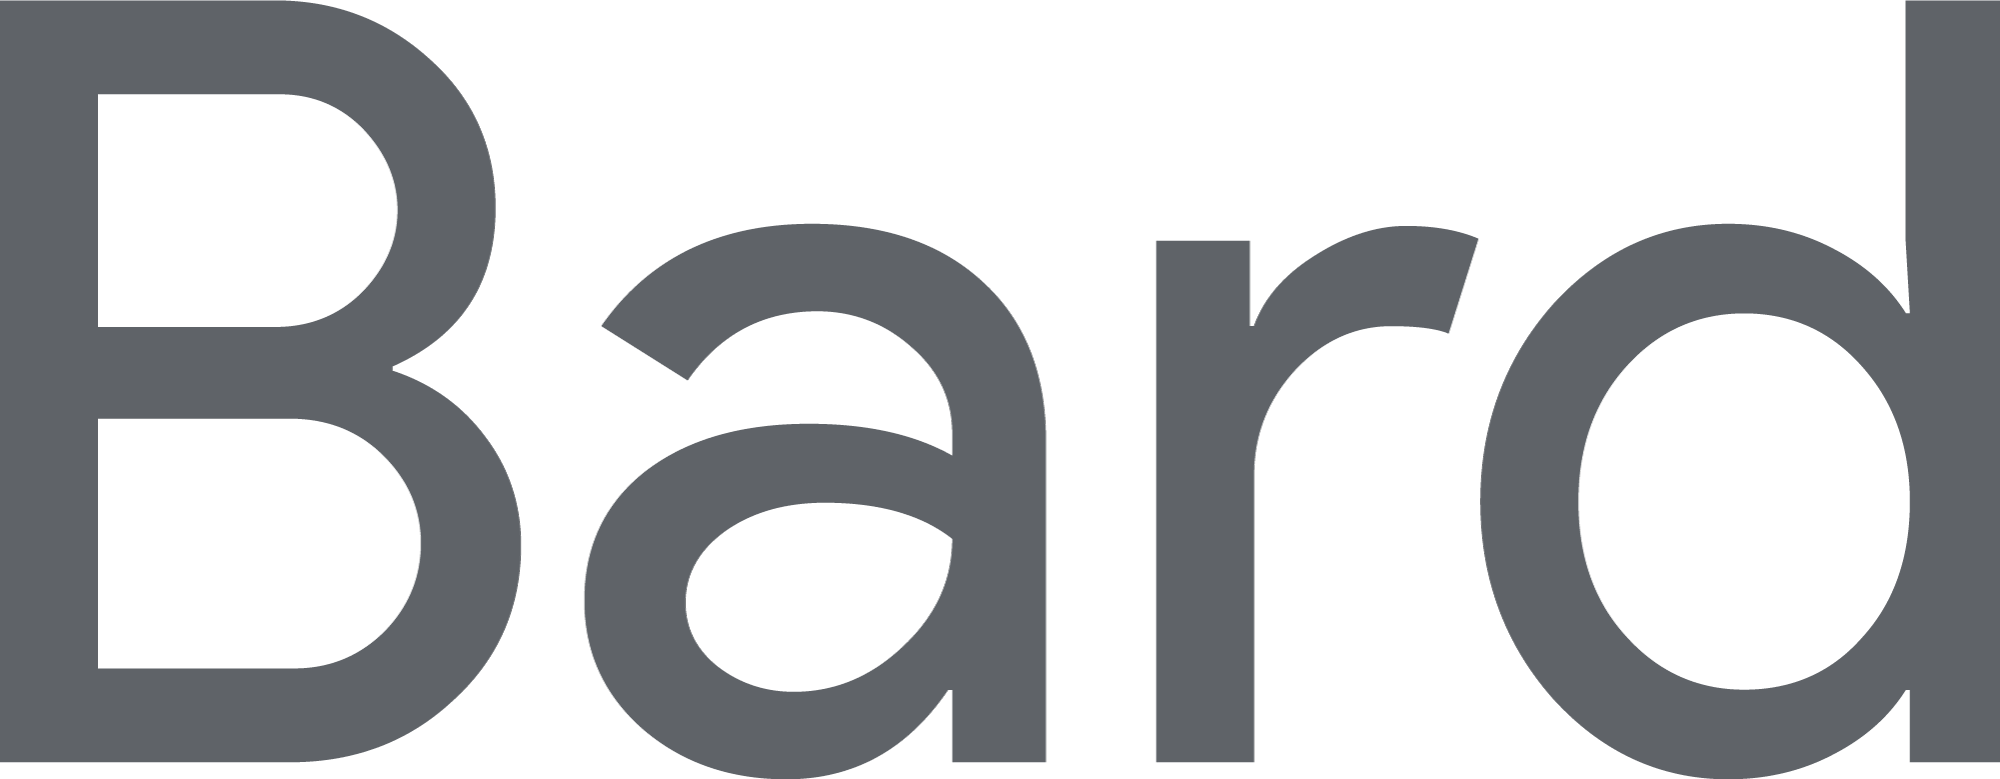 google bard logo transparent